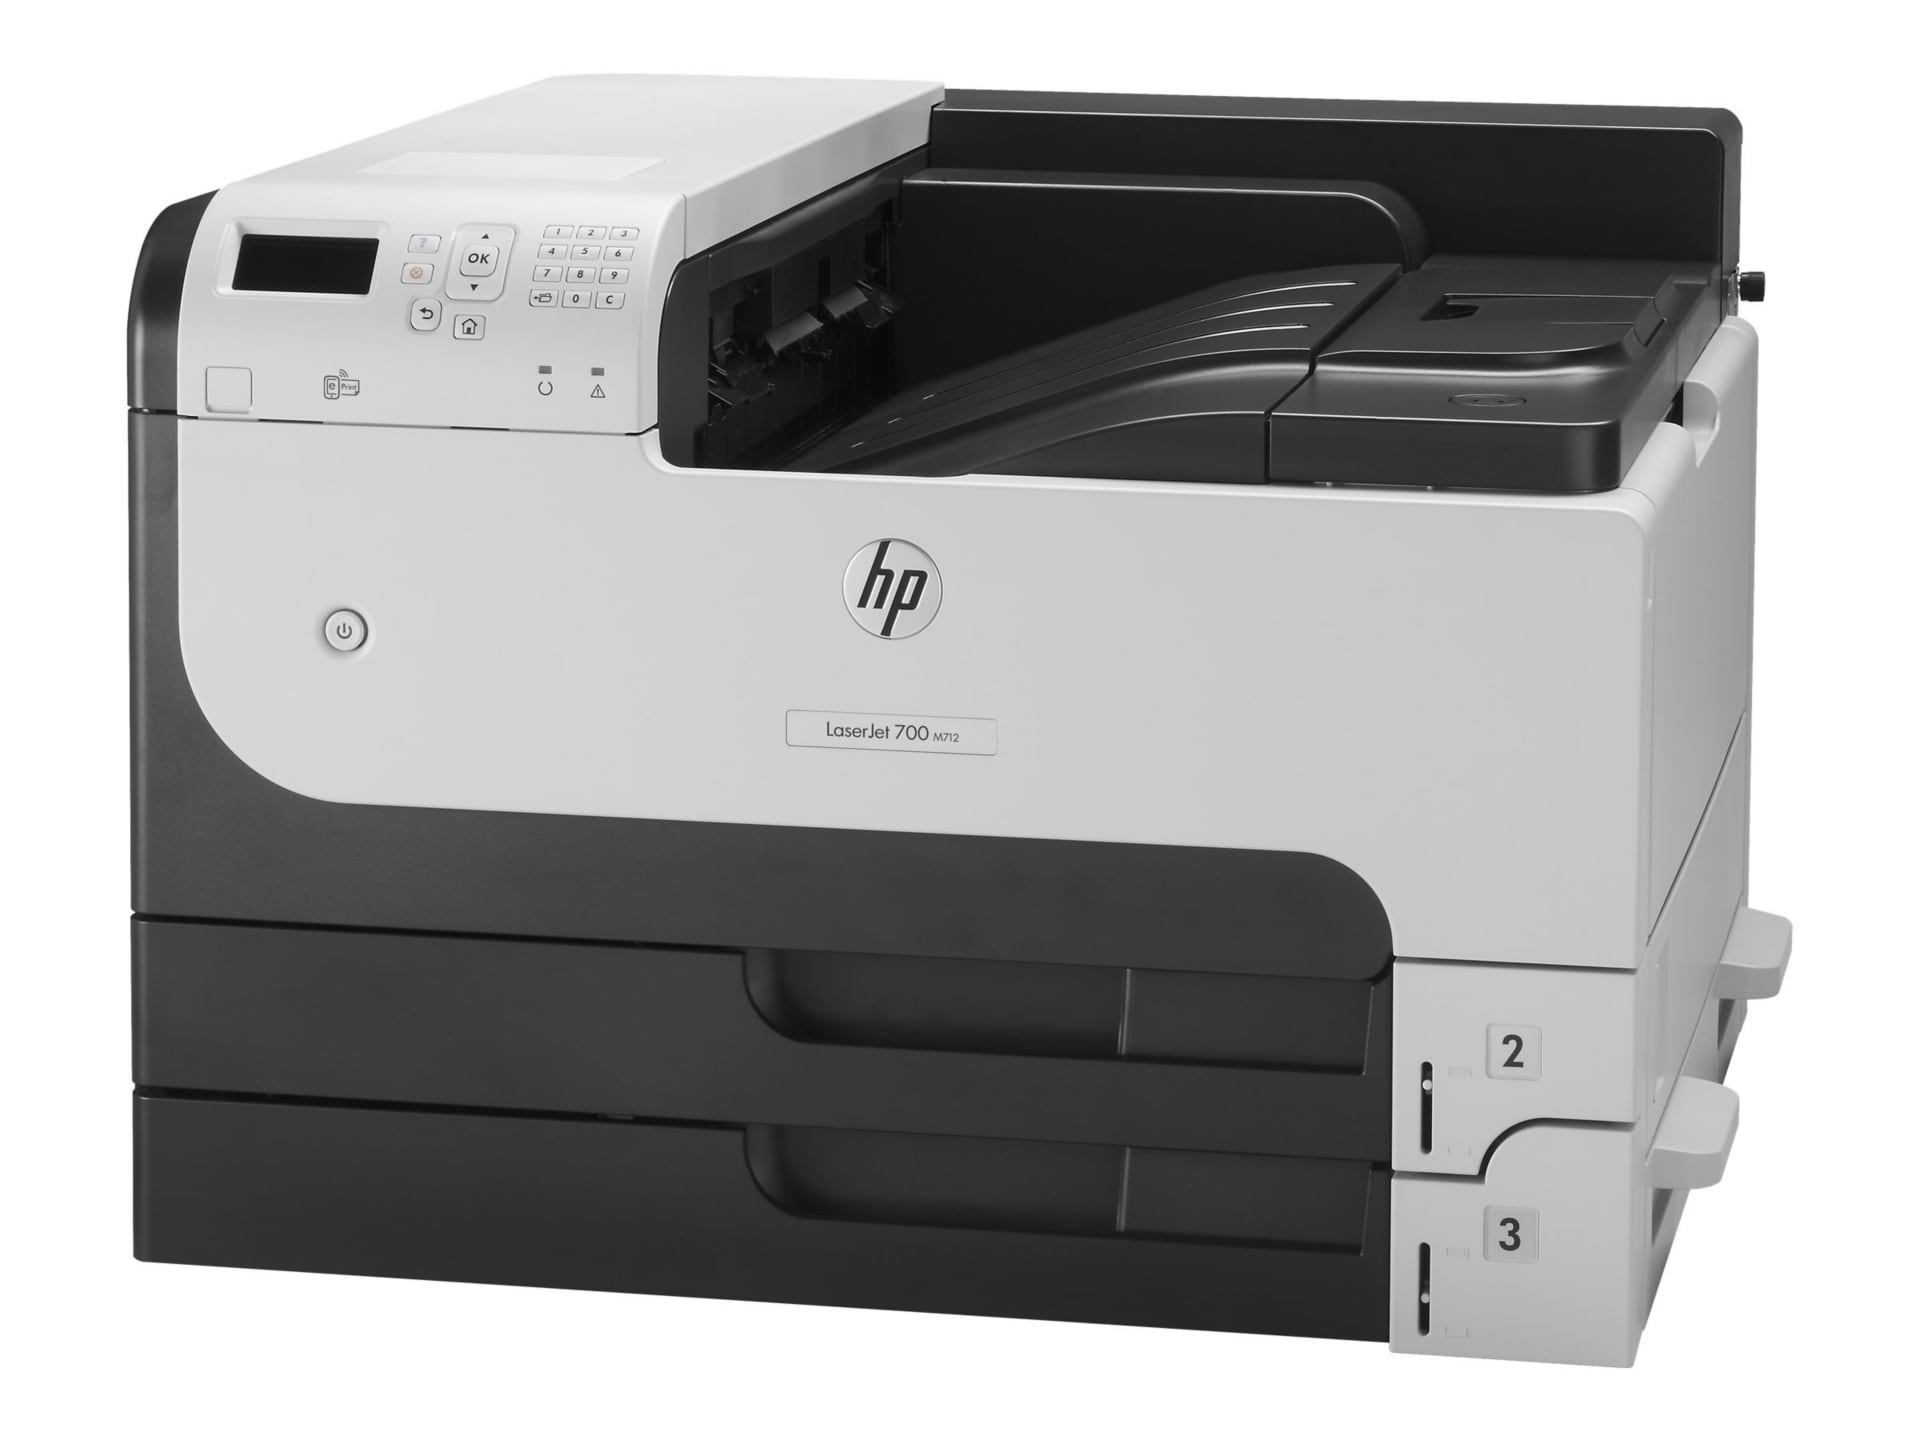 HP Enterprise 700 Printer - printer - B/W - laser - CF235A#BGJ - Laser Printers - CDW.com